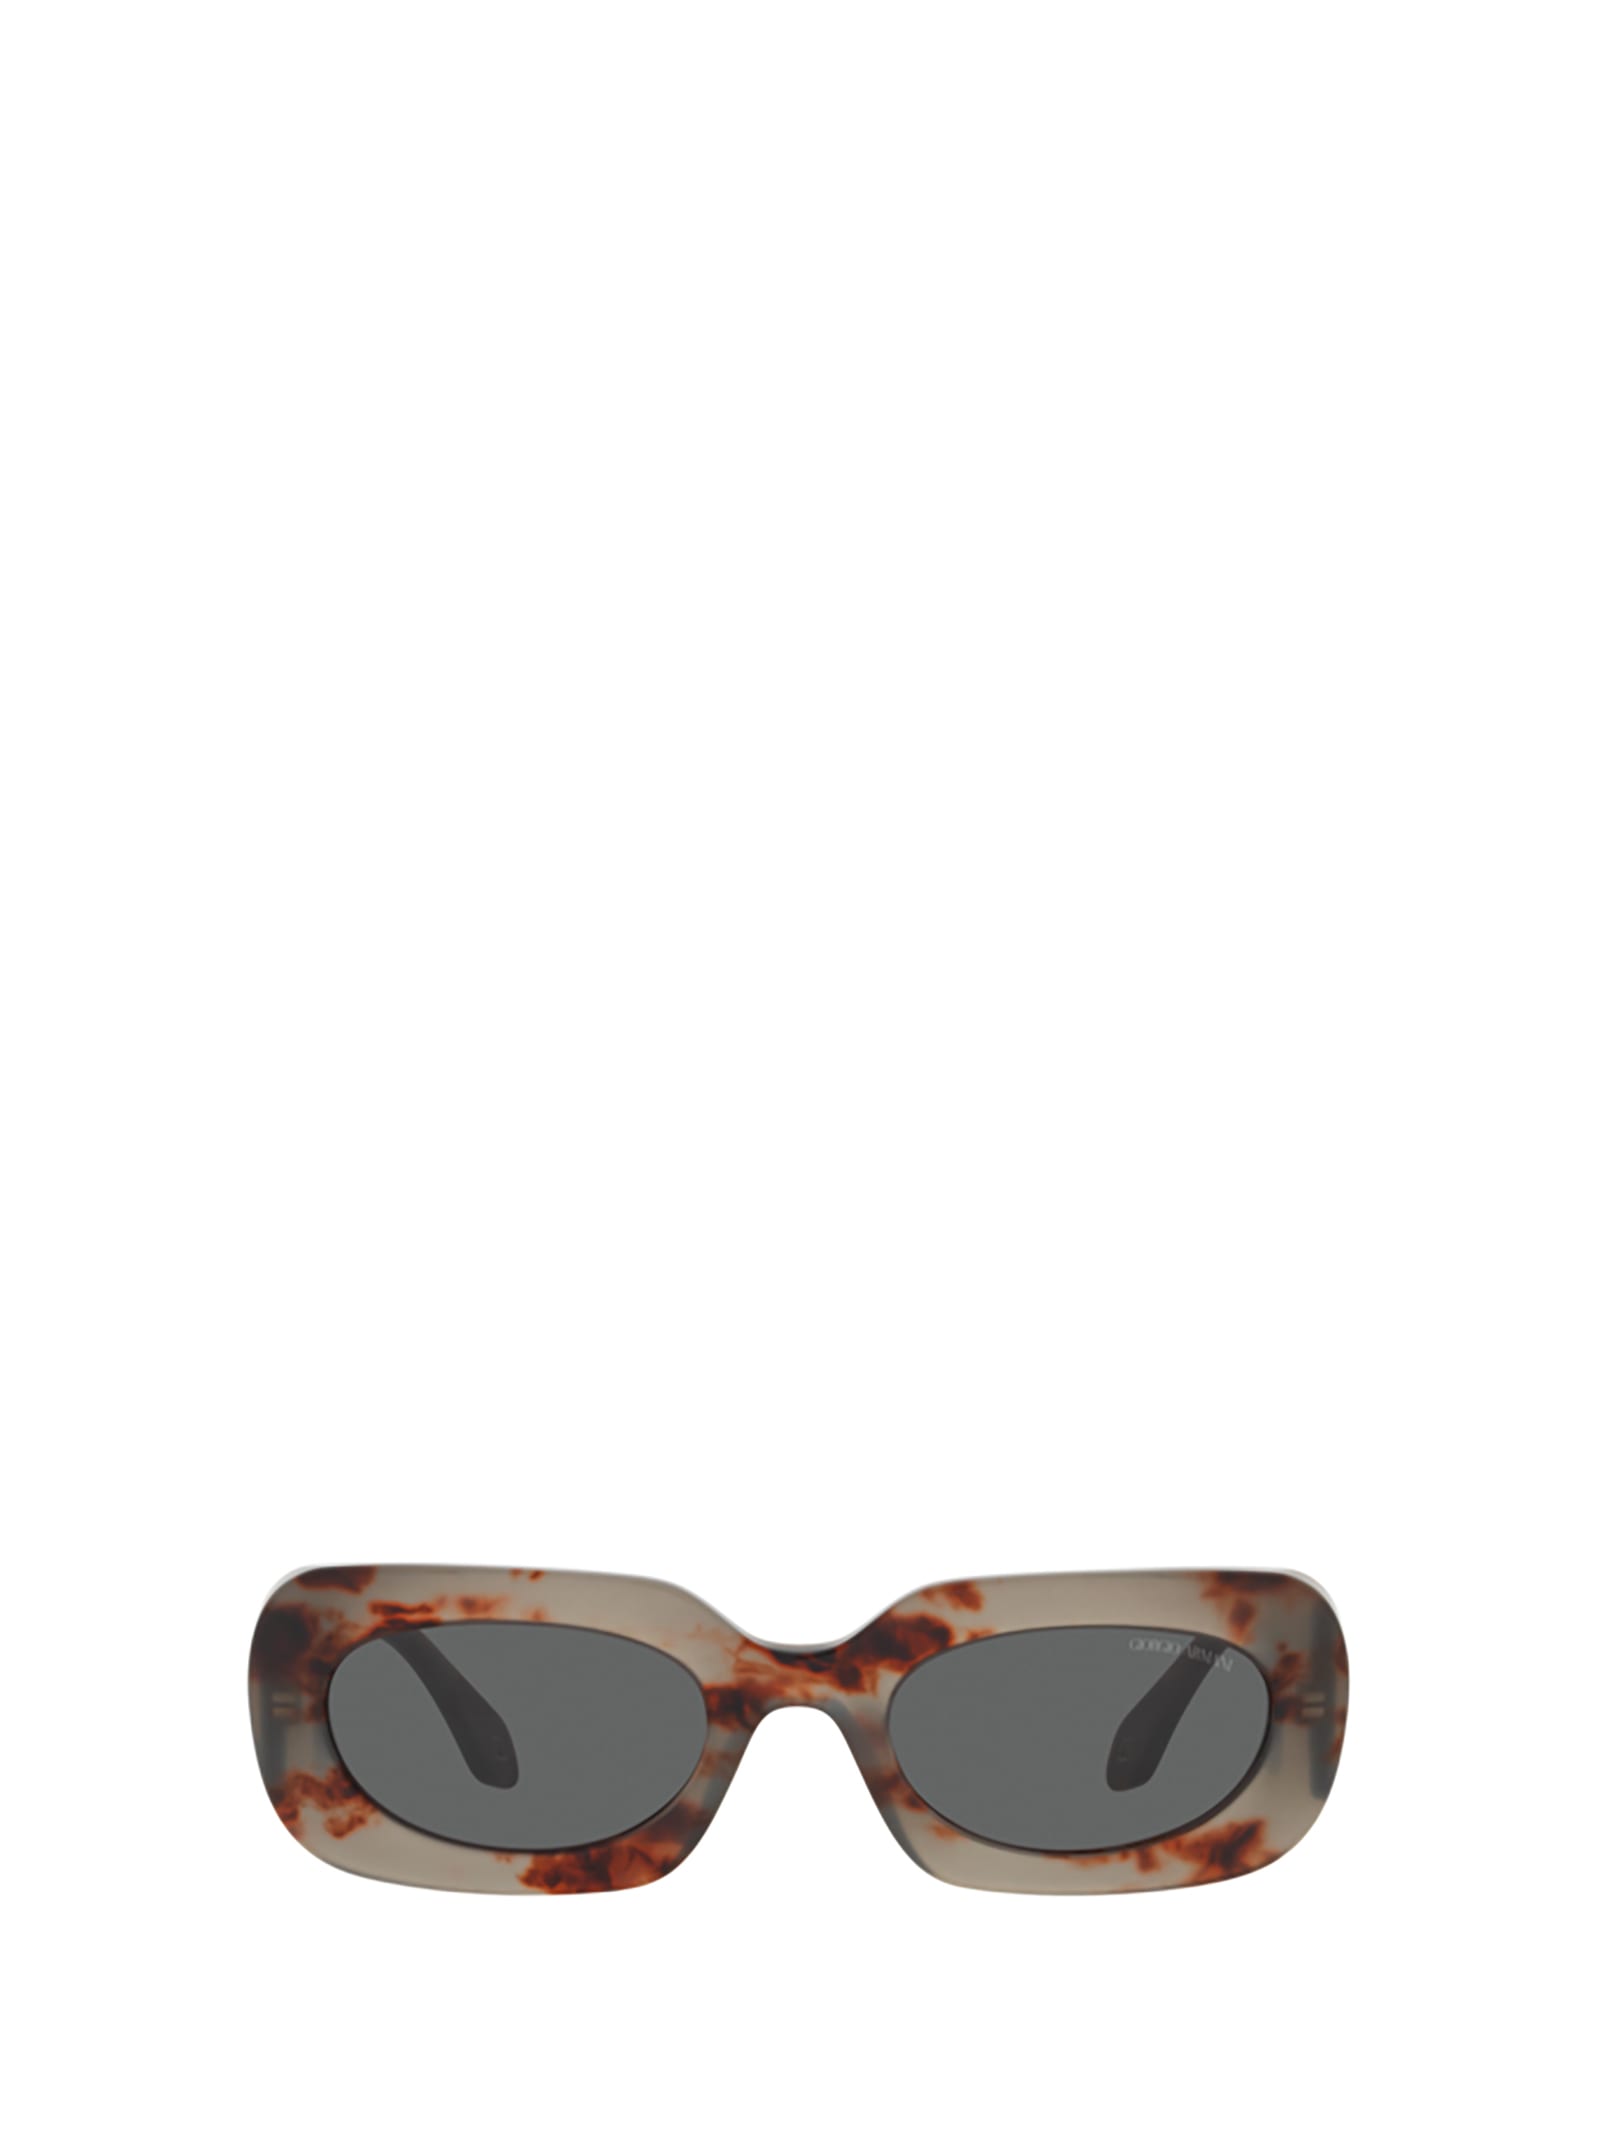 Giorgio Armani Ar8182 Grey Havana Sunglasses